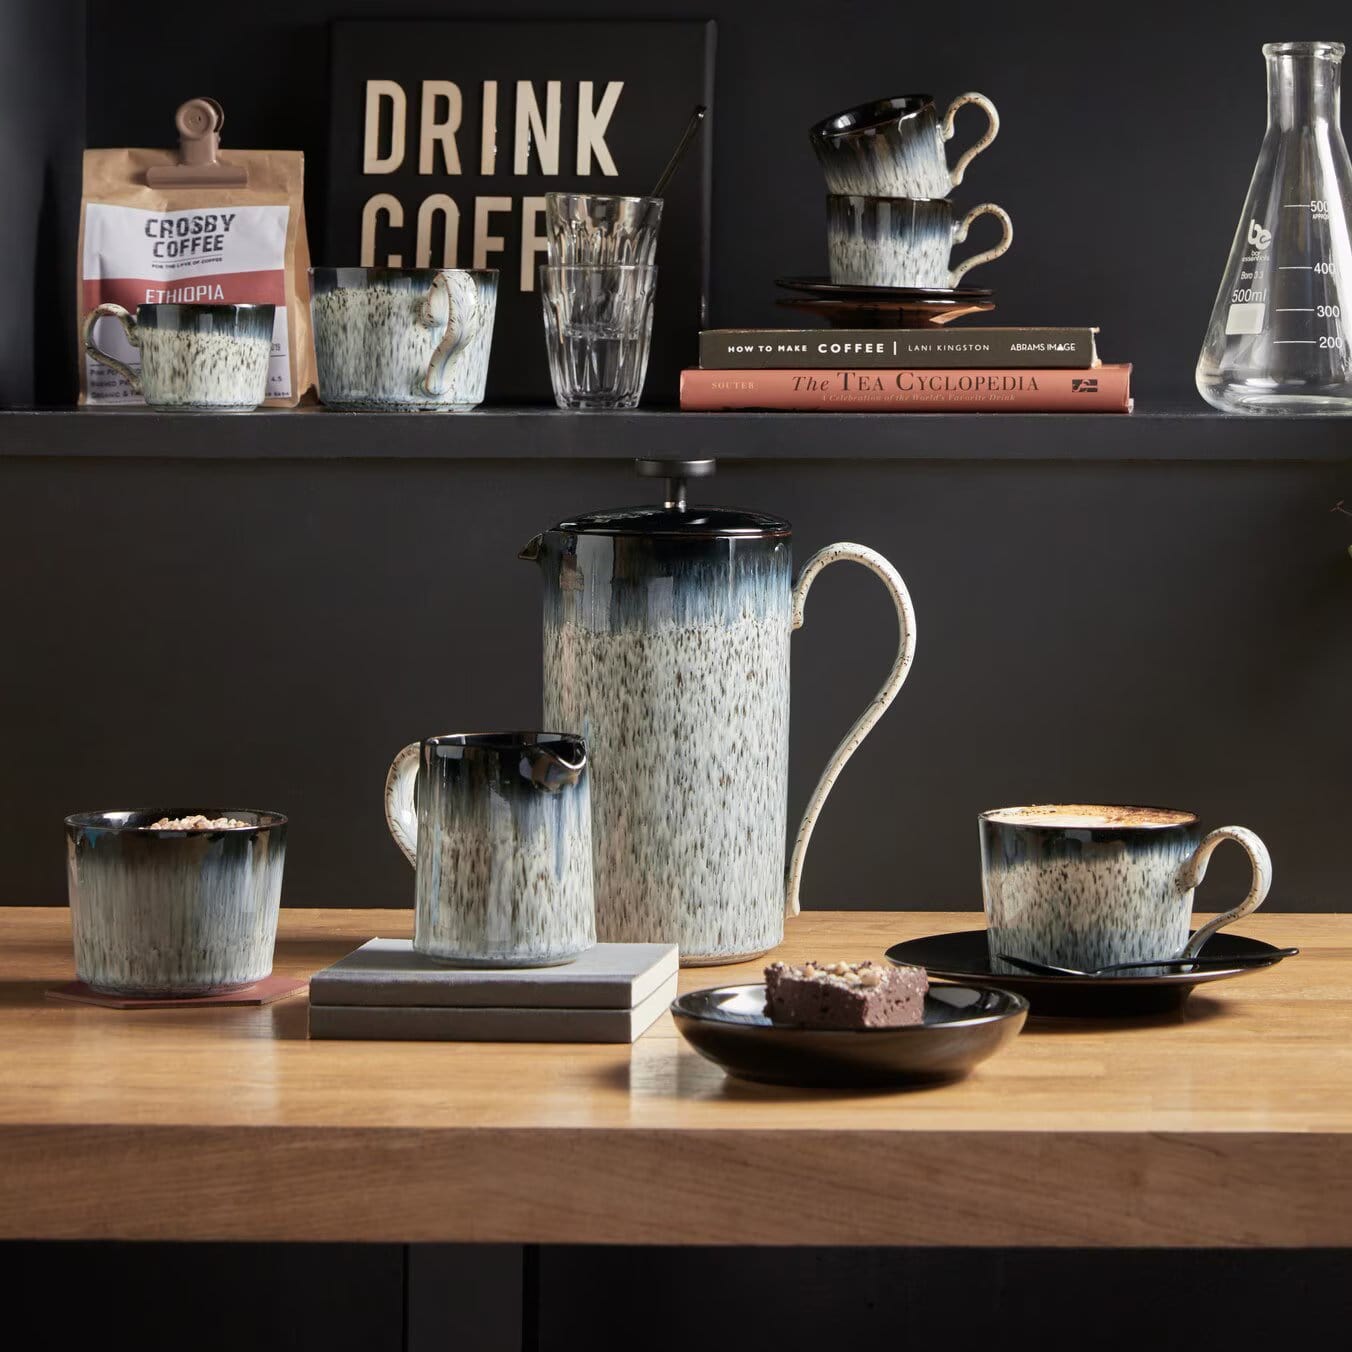 Denby Halo Brew Tea/Coffee Cup